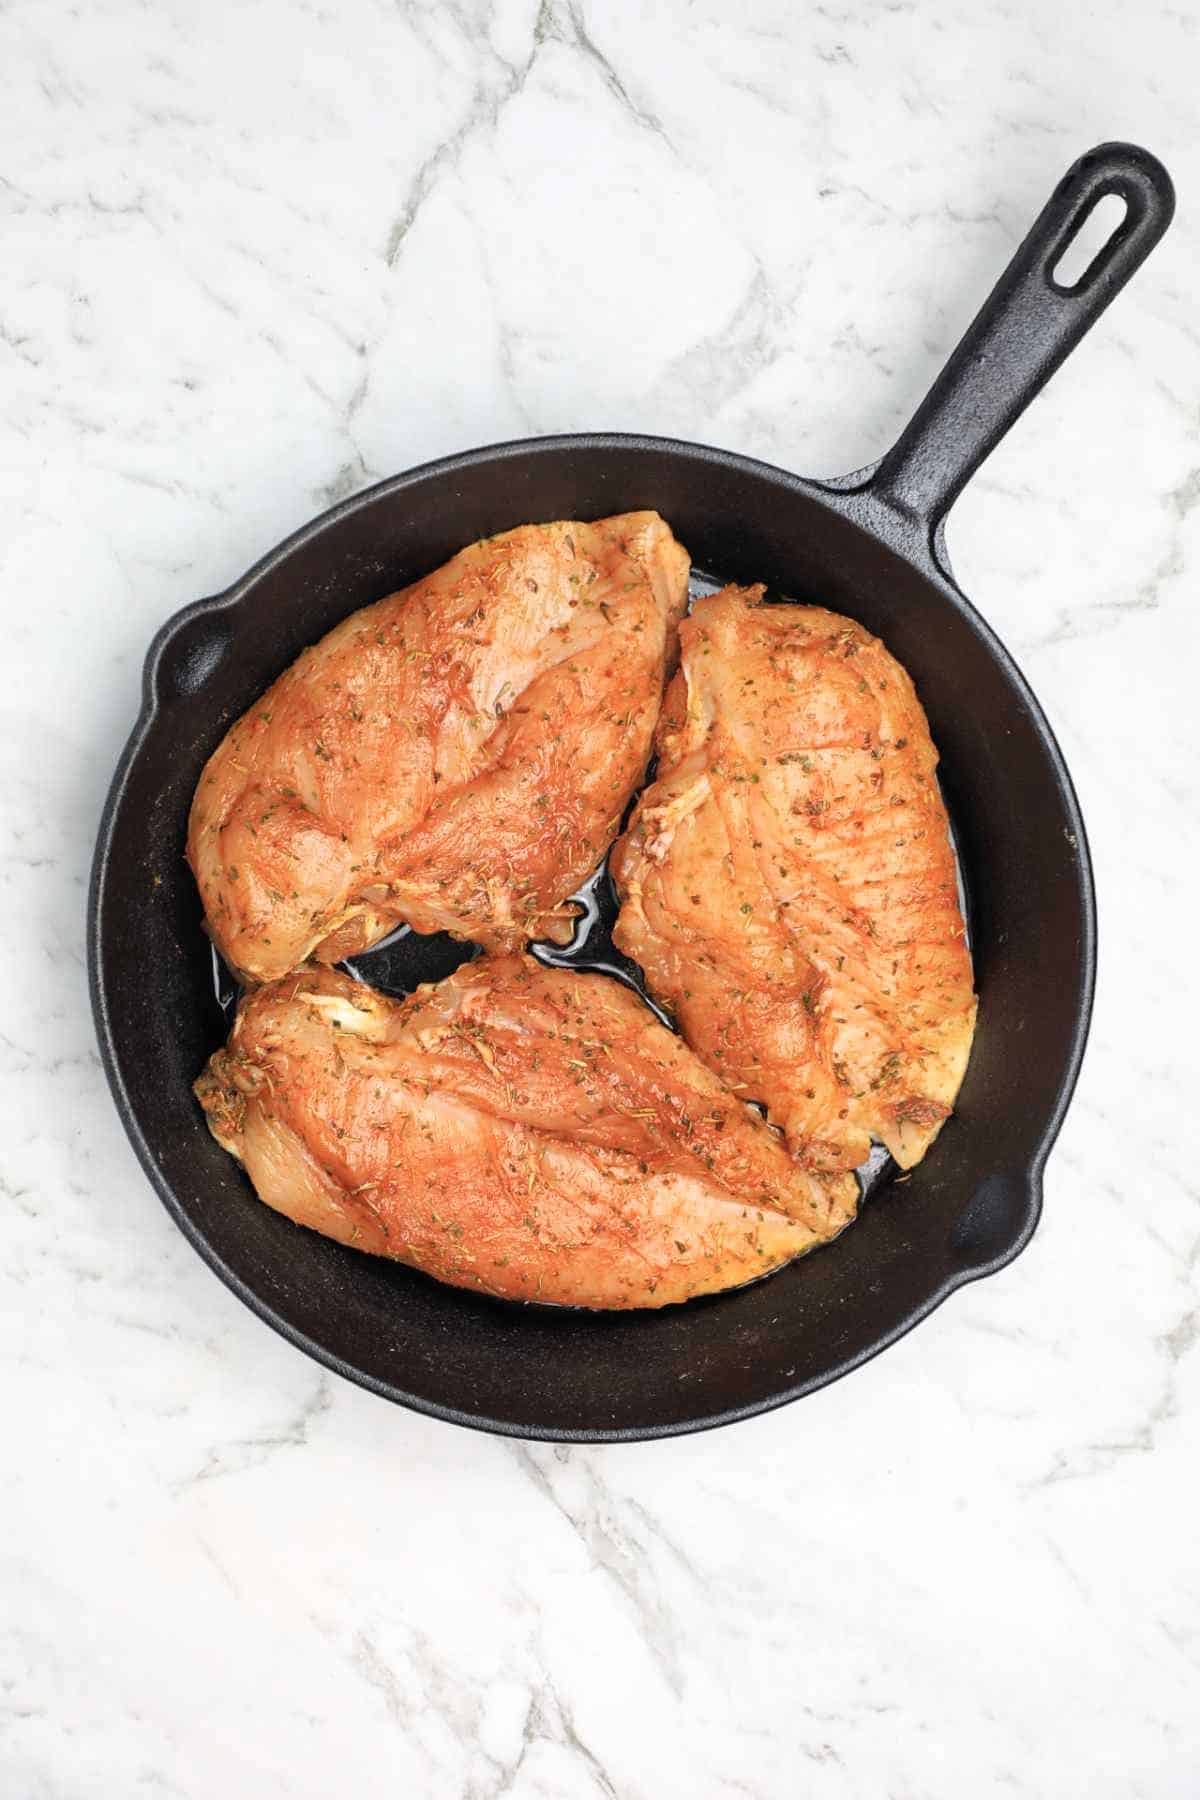 seasoned chicken in a cast iron skillet.